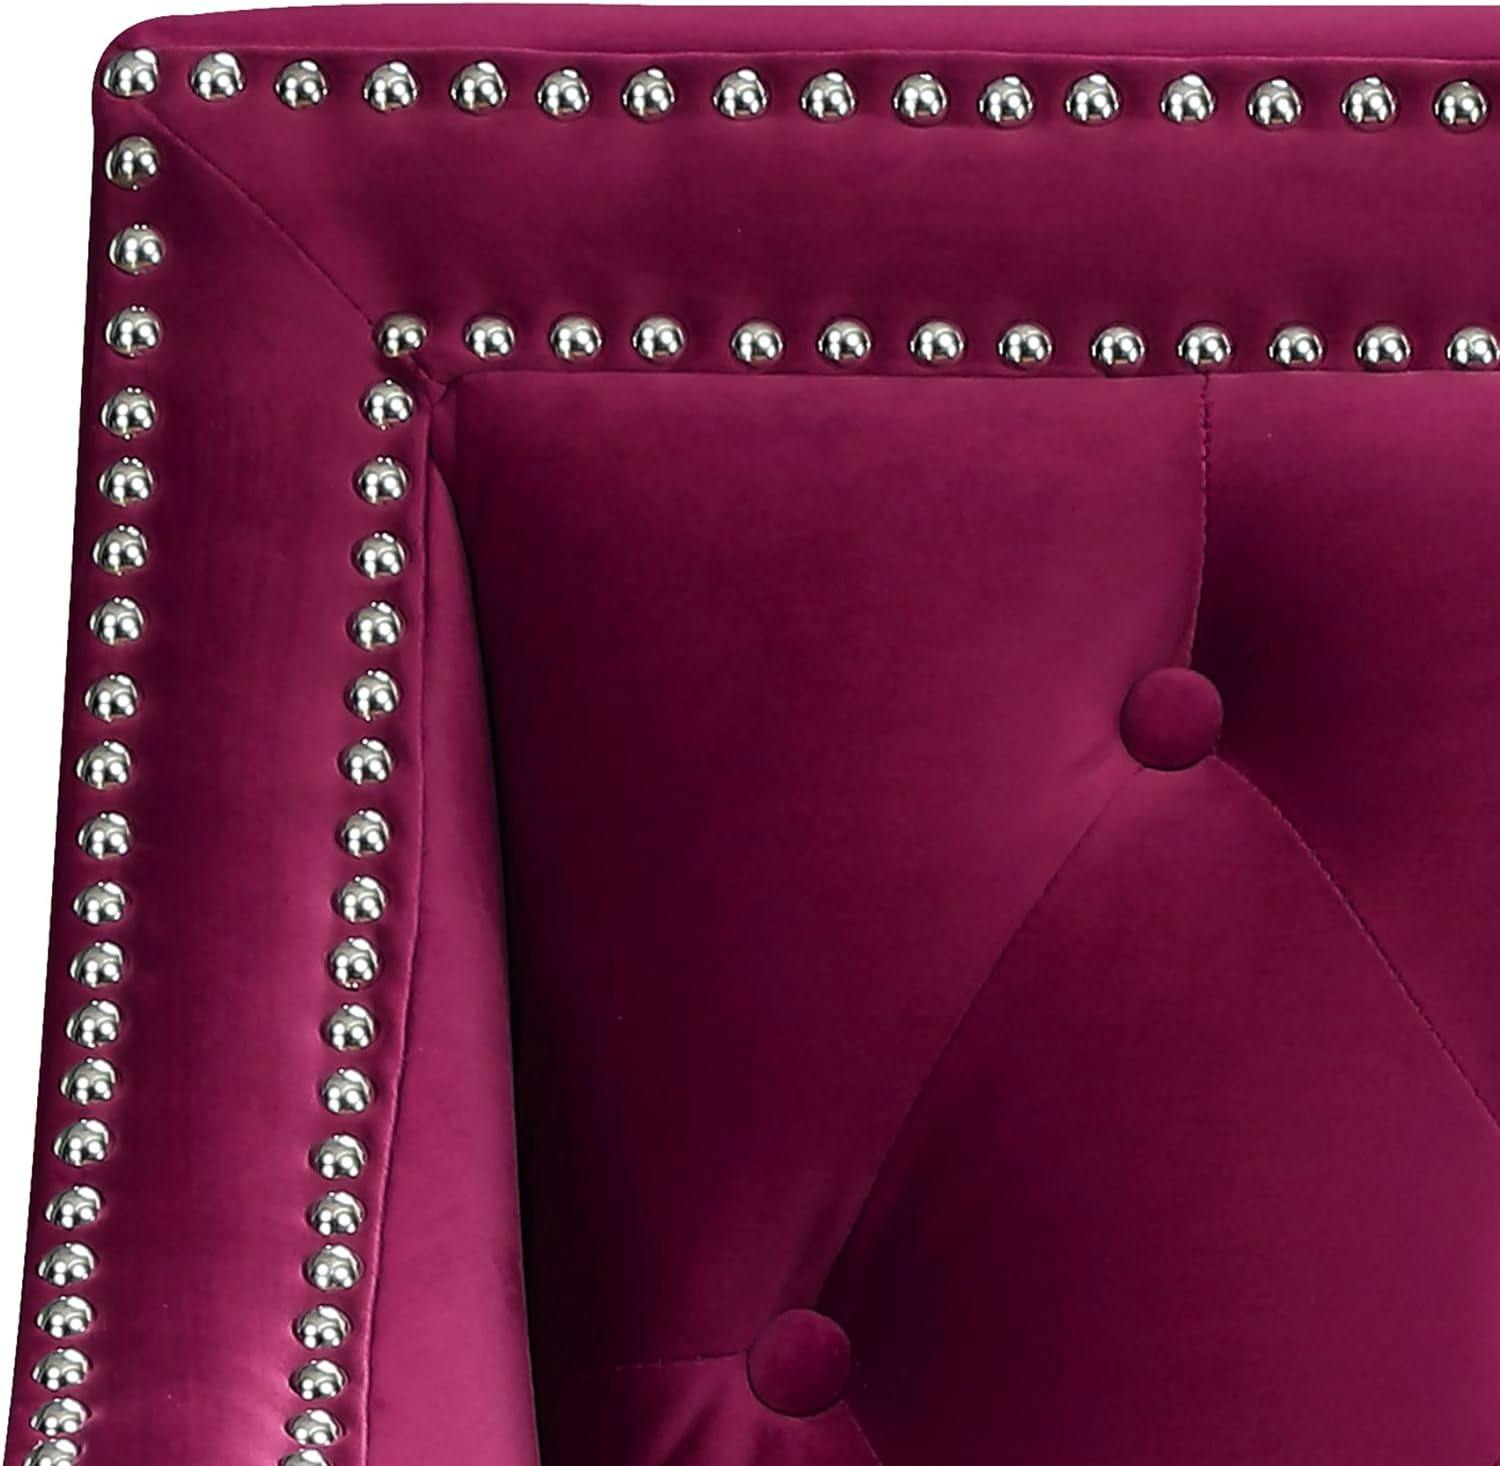 Roxanne Wine Red Velvet Diamond-Tufted Accent Chair